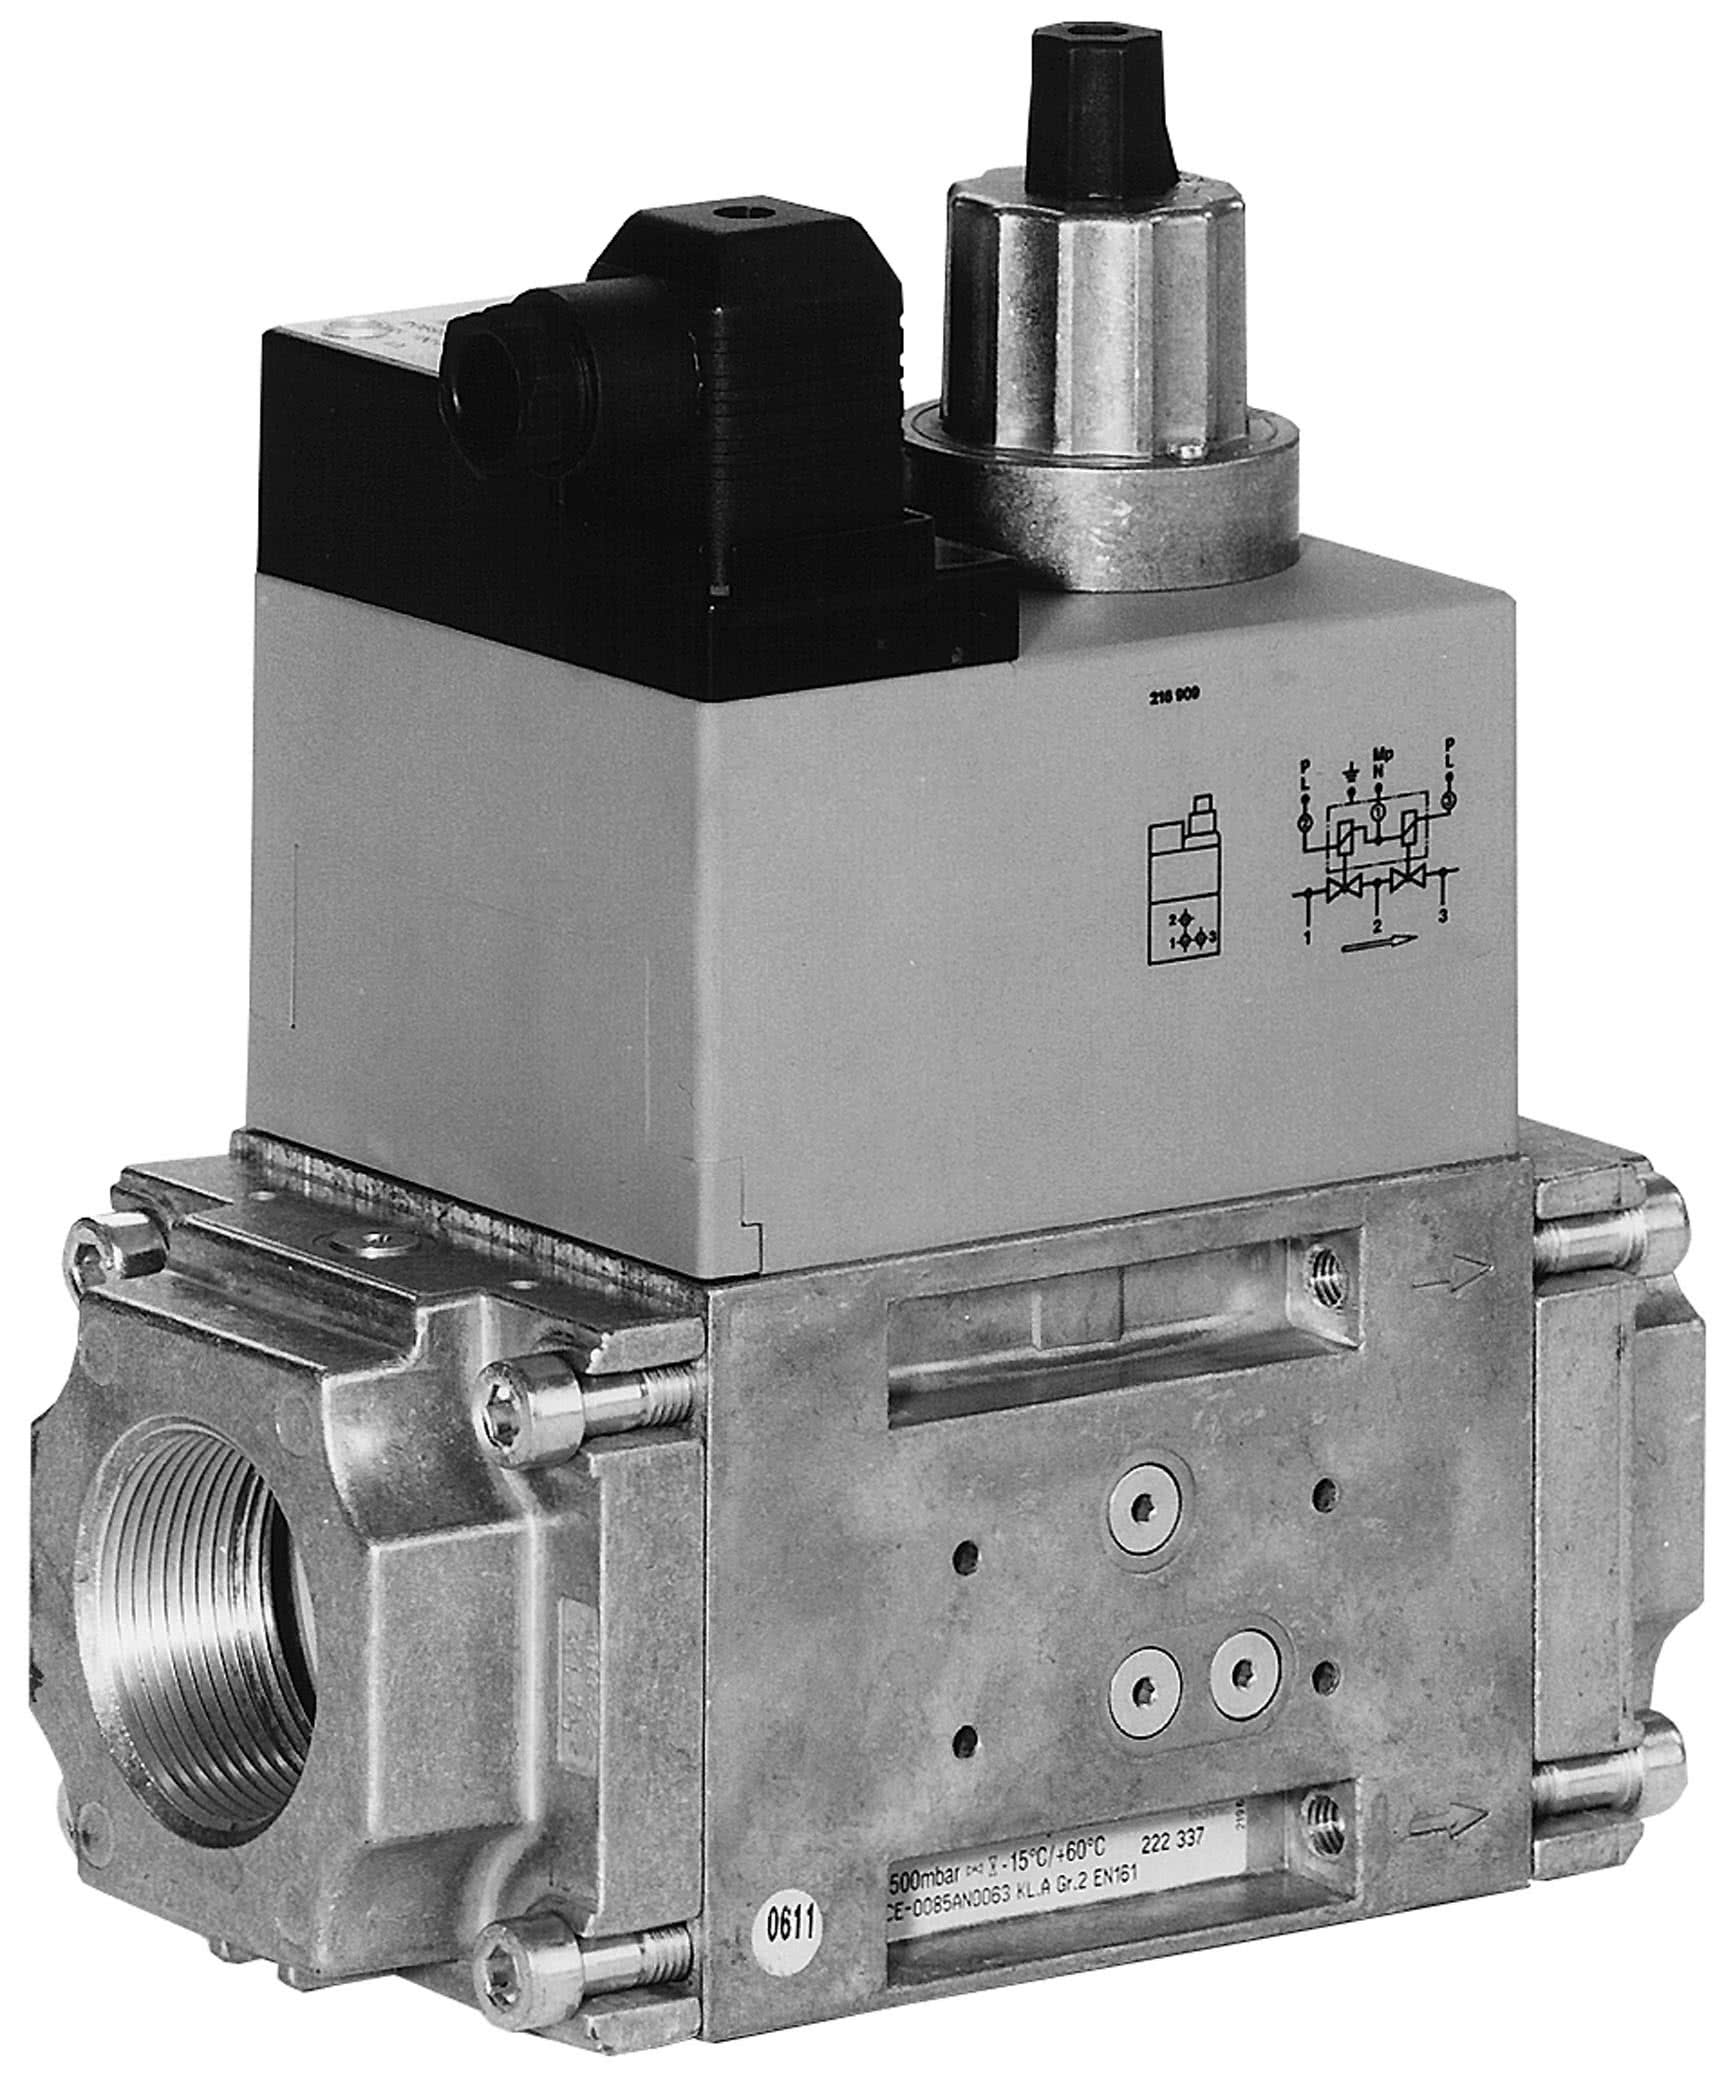 Двойной электромагнитный клапан Dungs DMV-DLE 5080/11 AC 220-240 V IP 54 Steck| 224926  